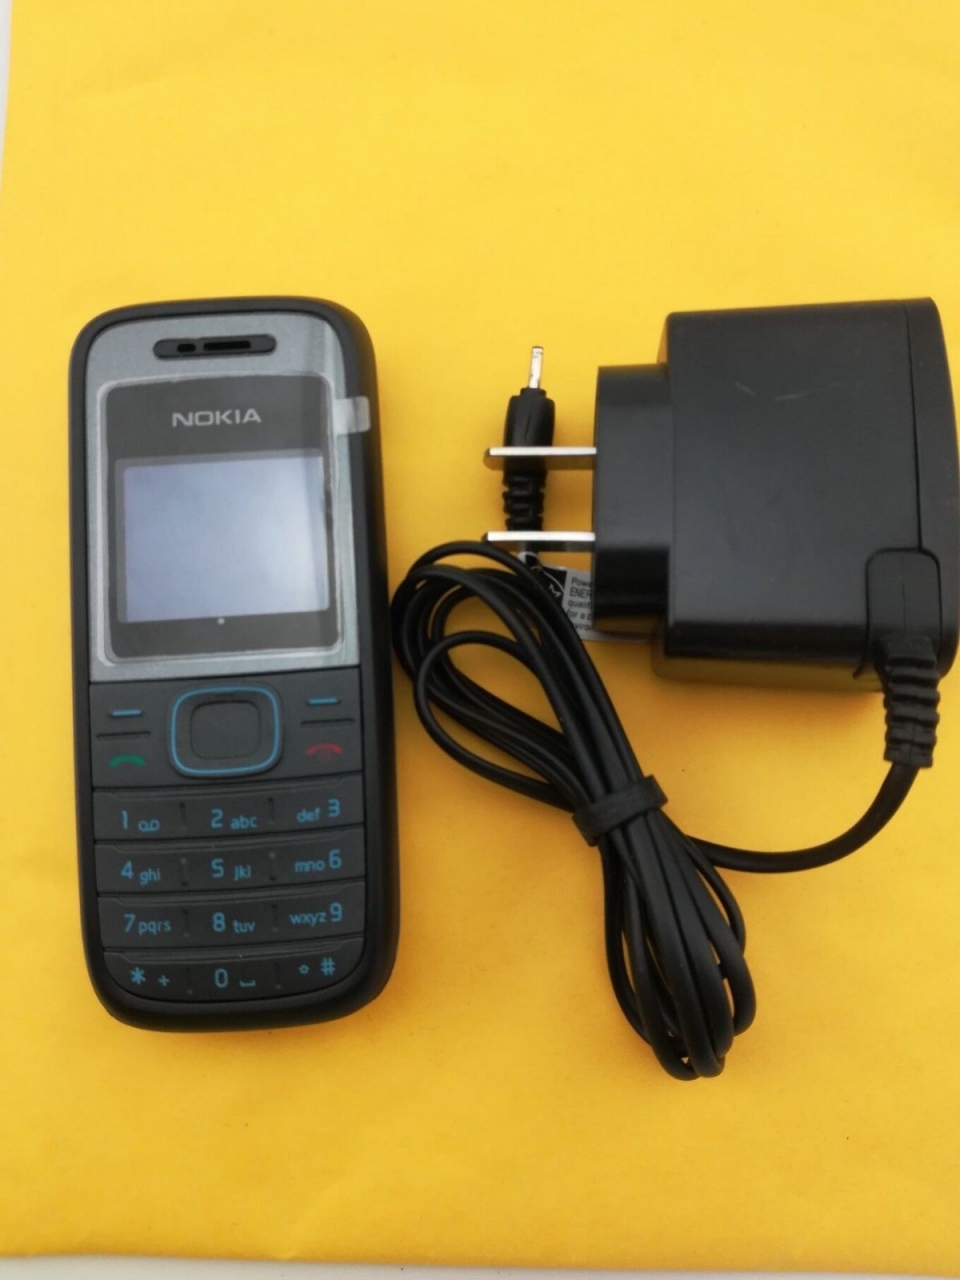 Refurbished phone Original Cellular Nokia 1208 Cheap phones GSM unlocked phone red 14